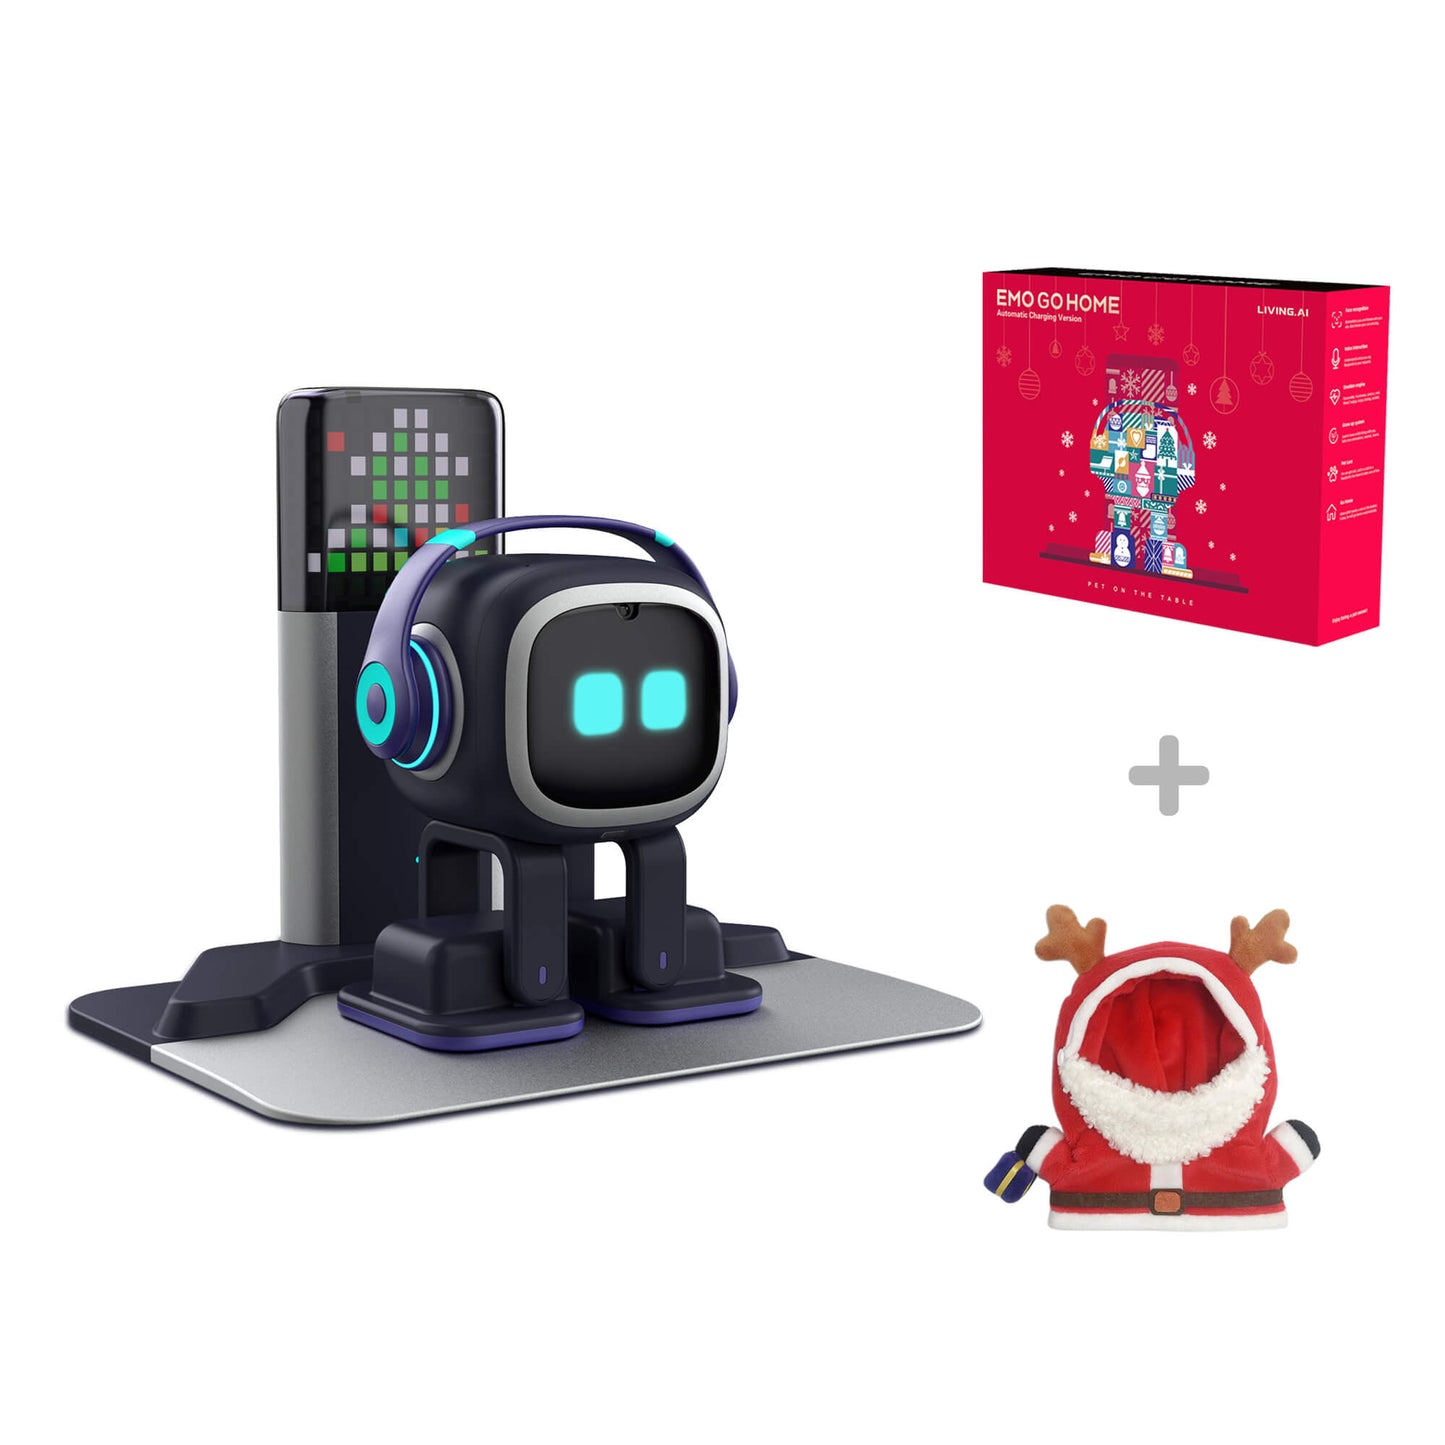 Product Details : EMO Pet Living AI- Desktop Pet Robot New Ho Home Version  With Charging Station